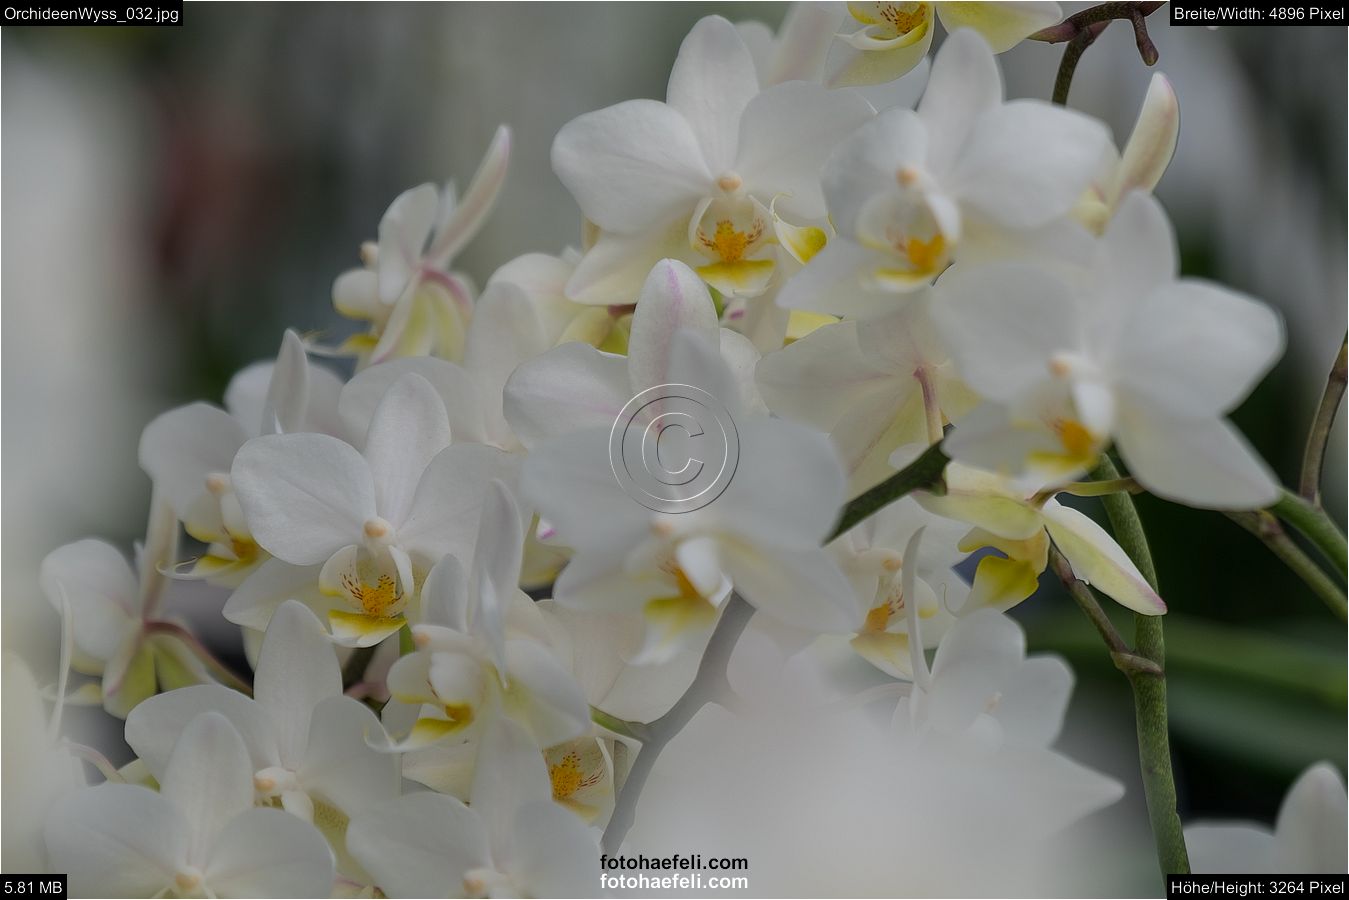 OrchideenWyss_032.jpg